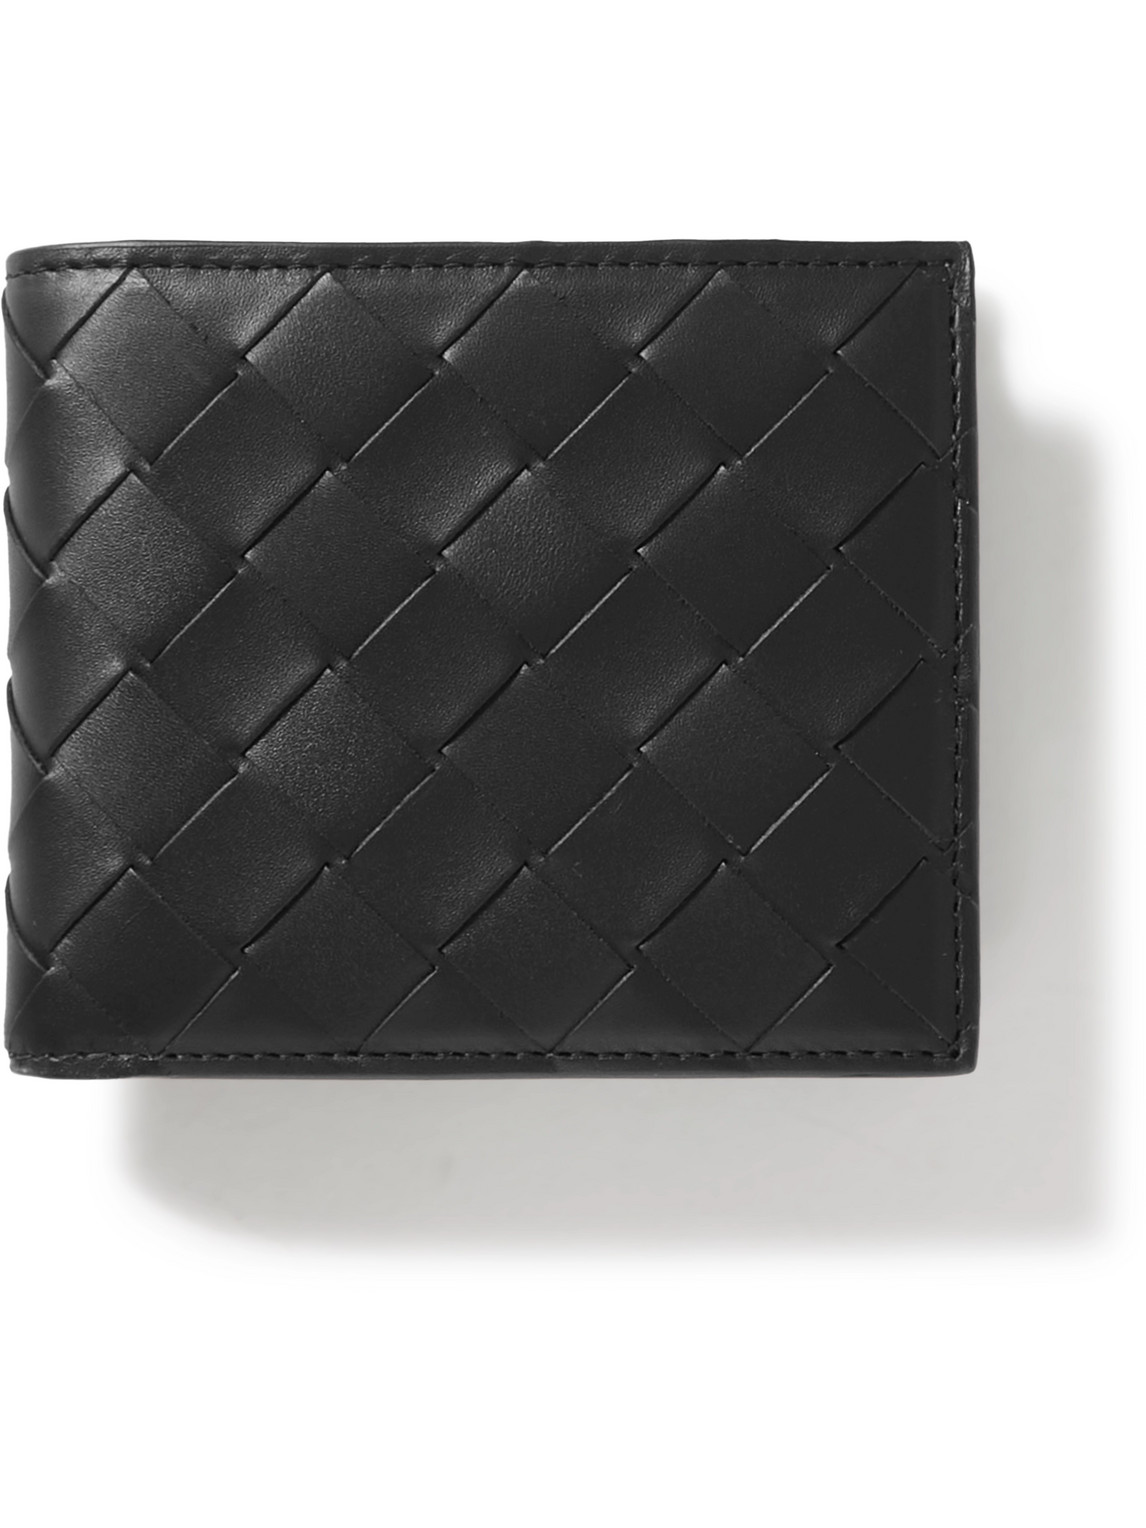 Bottega Veneta - Intrecciato Leather Billfold Wallet - Men - Black von Bottega Veneta